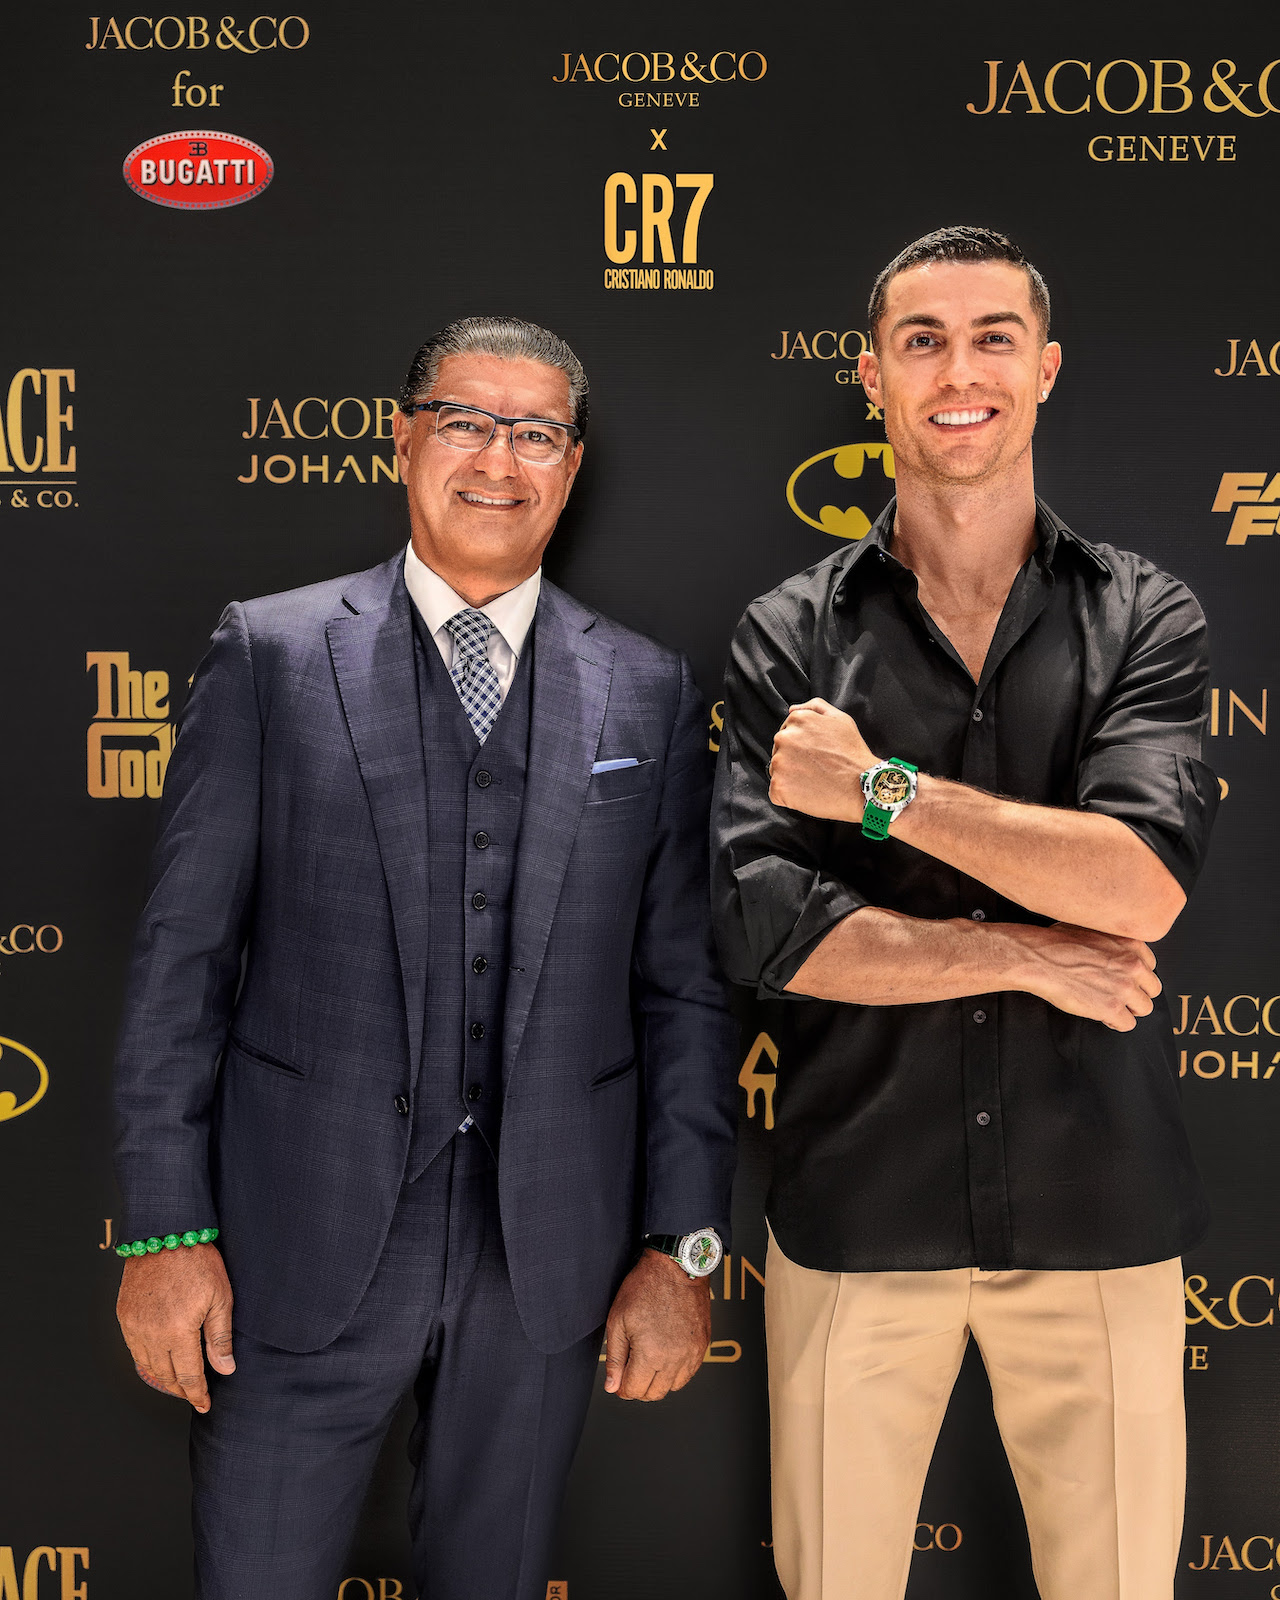 Jacob & Co Cristiano Ronaldo